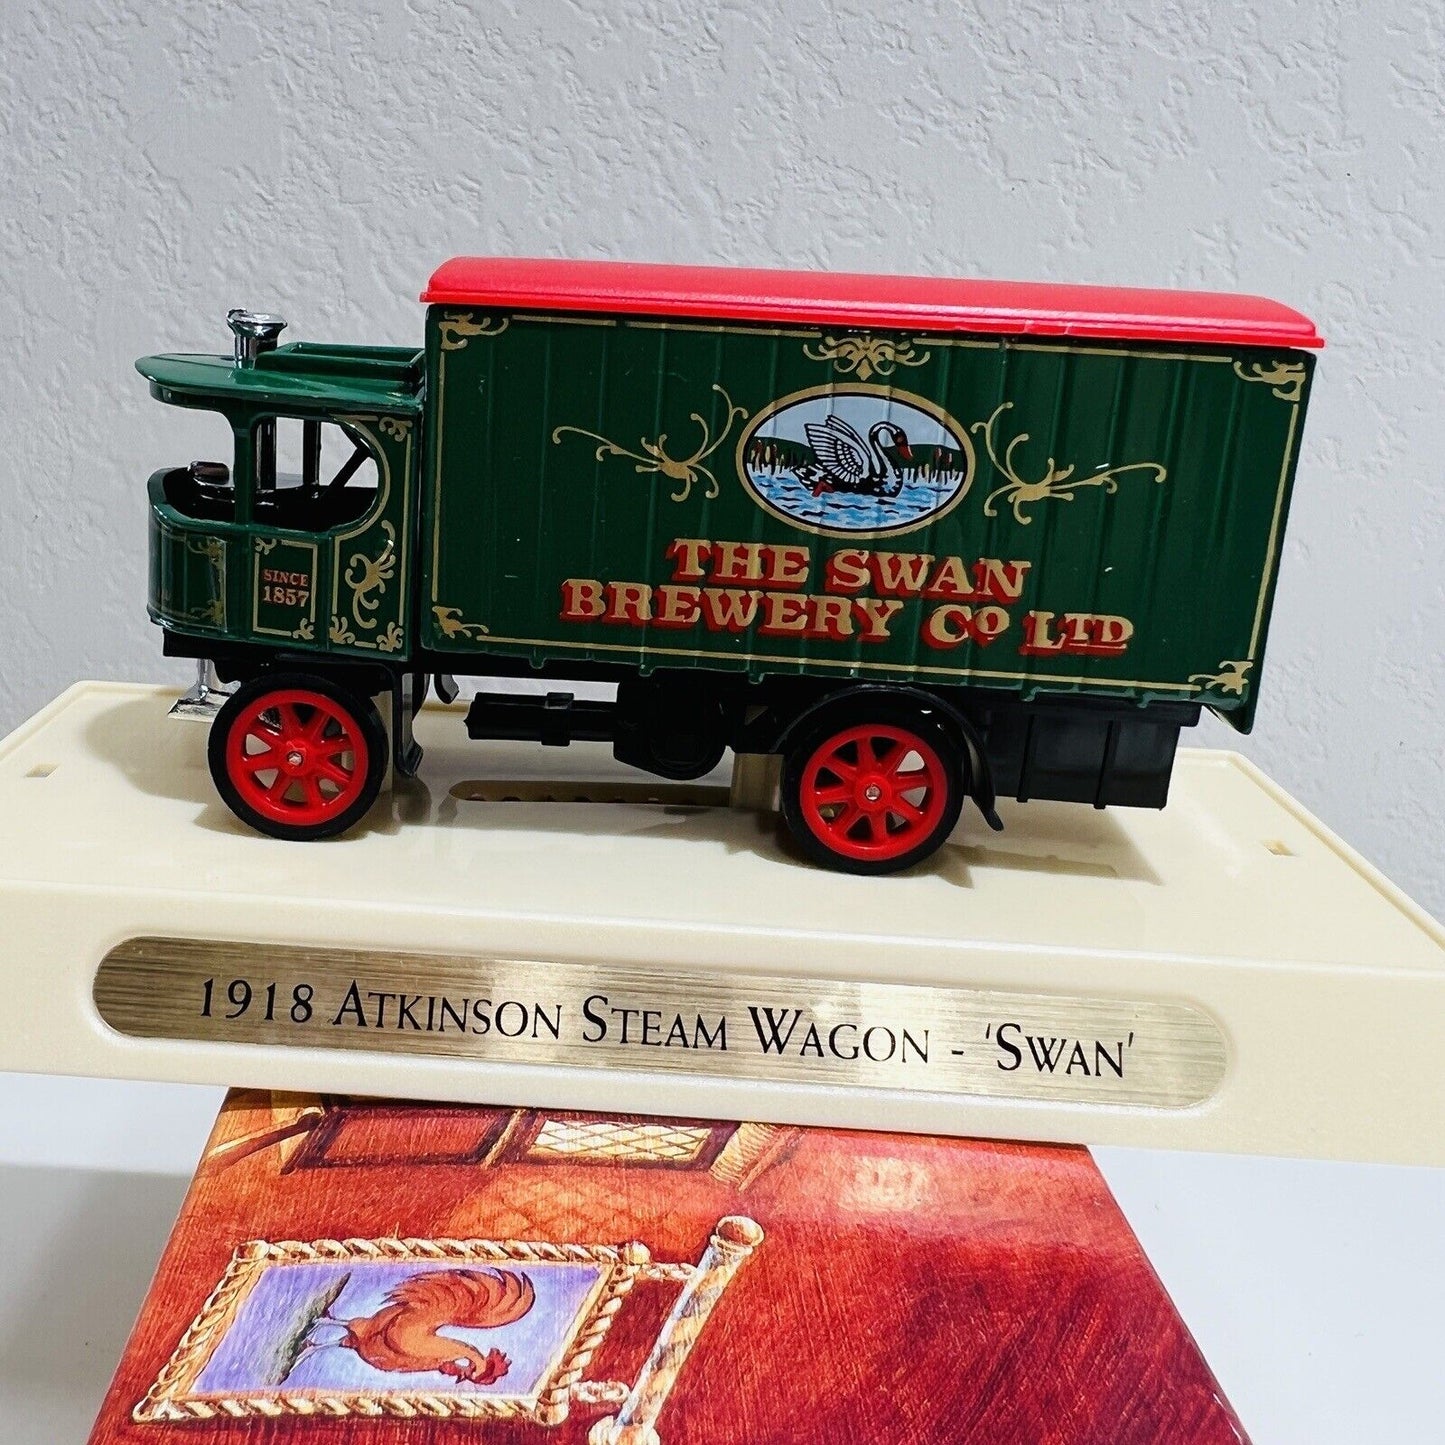 Matchbox Swan 1918 Atkinson Steam Wagon Car Die-cast Toys Models Of Yesterday